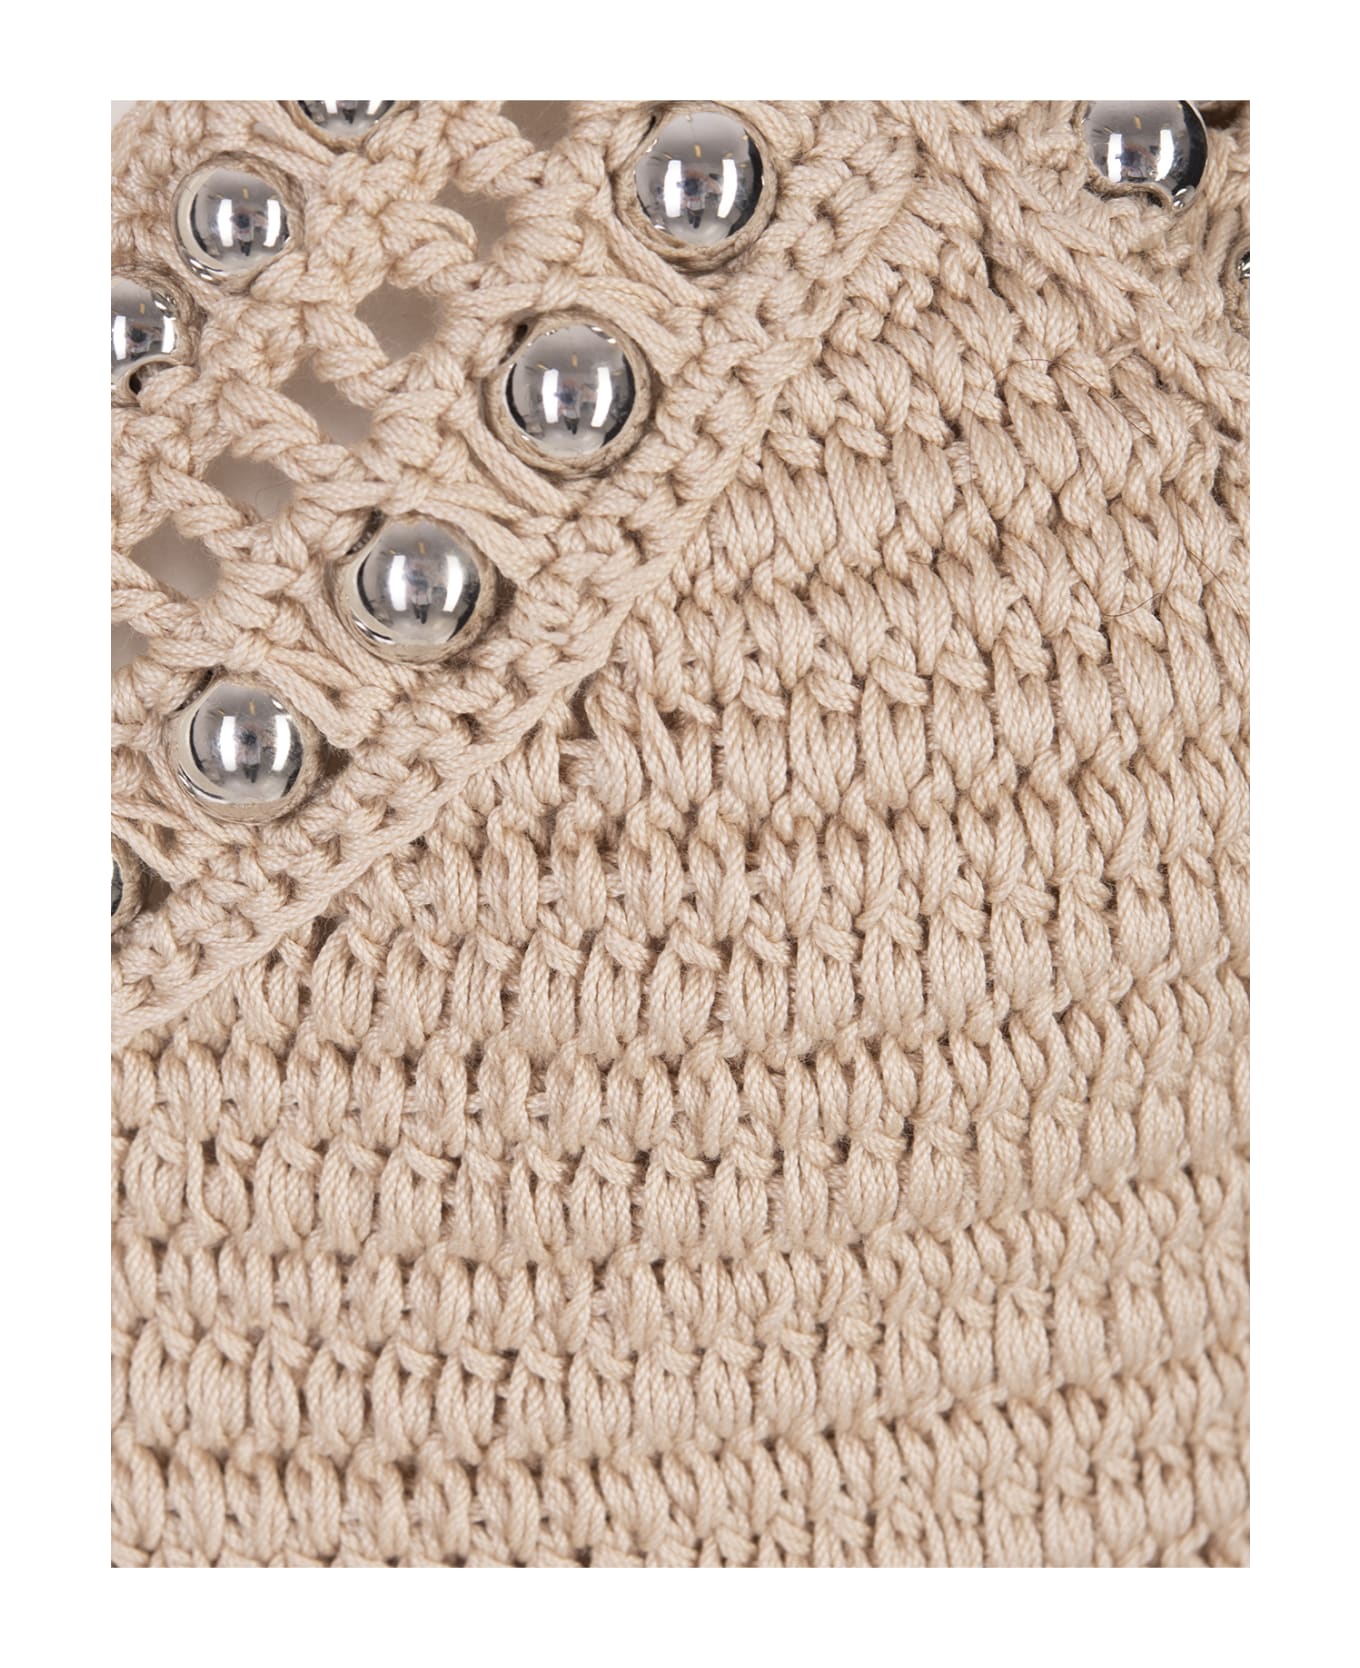 Paco Rabanne Beige Crochet Top With Pearls - BEIGE